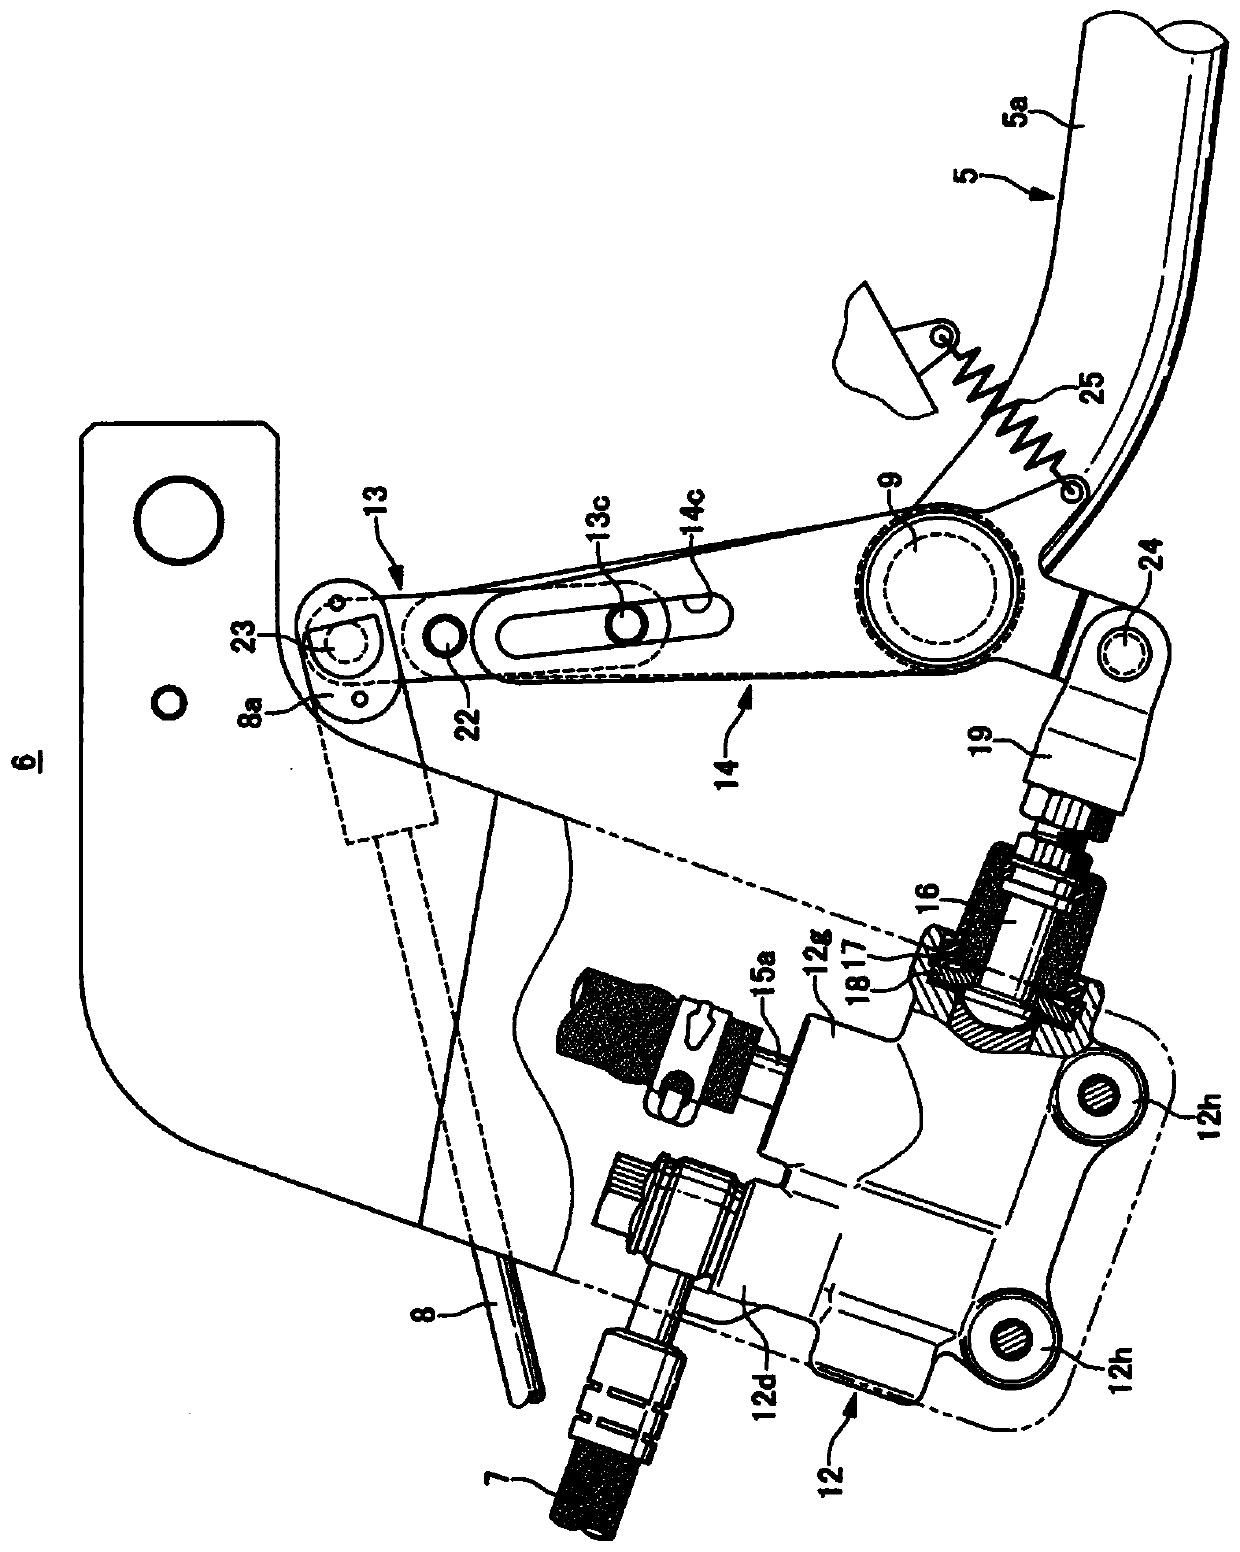 Braking device for joystick type vehicles